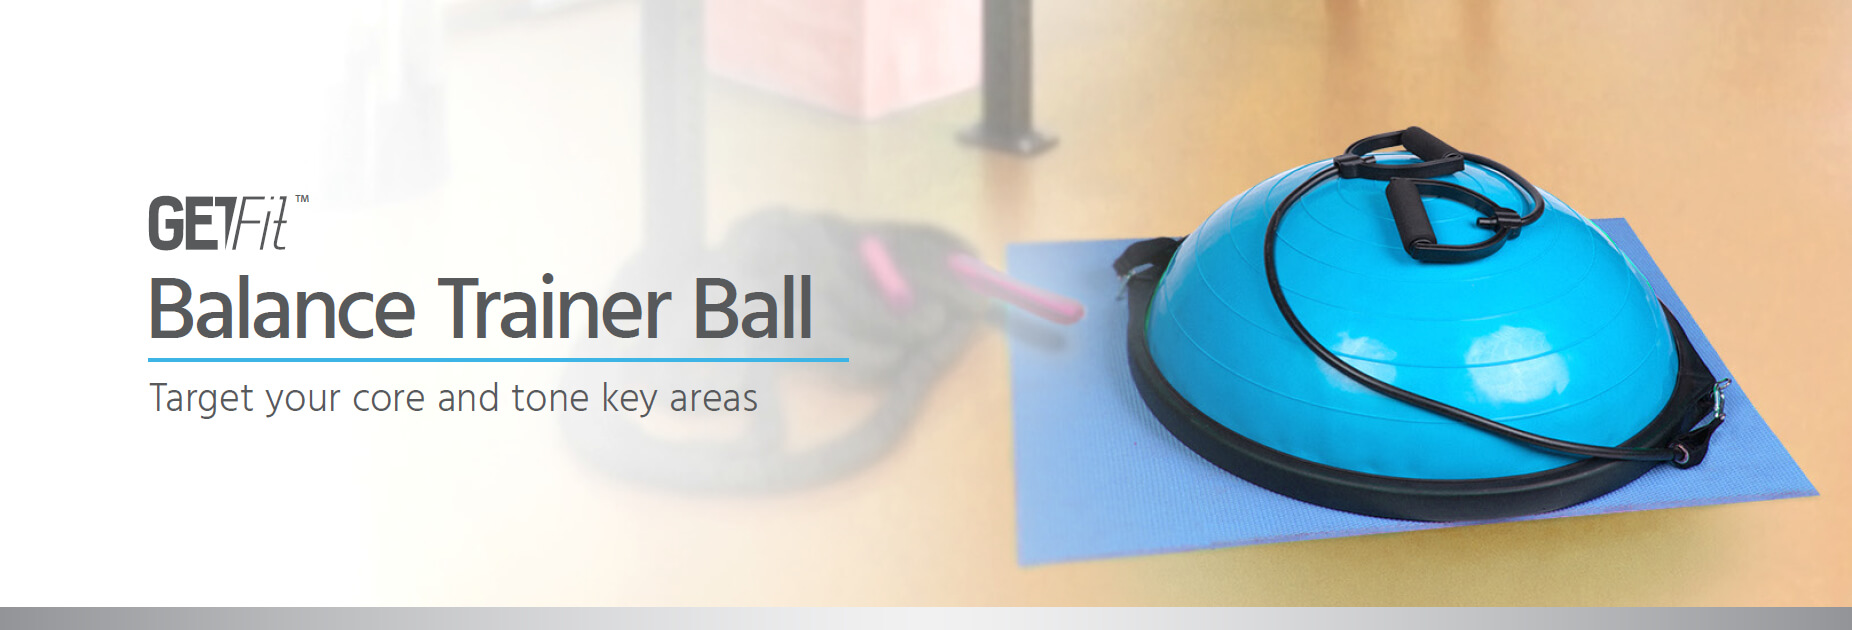 GetFit Balance Trainer Ball Ball